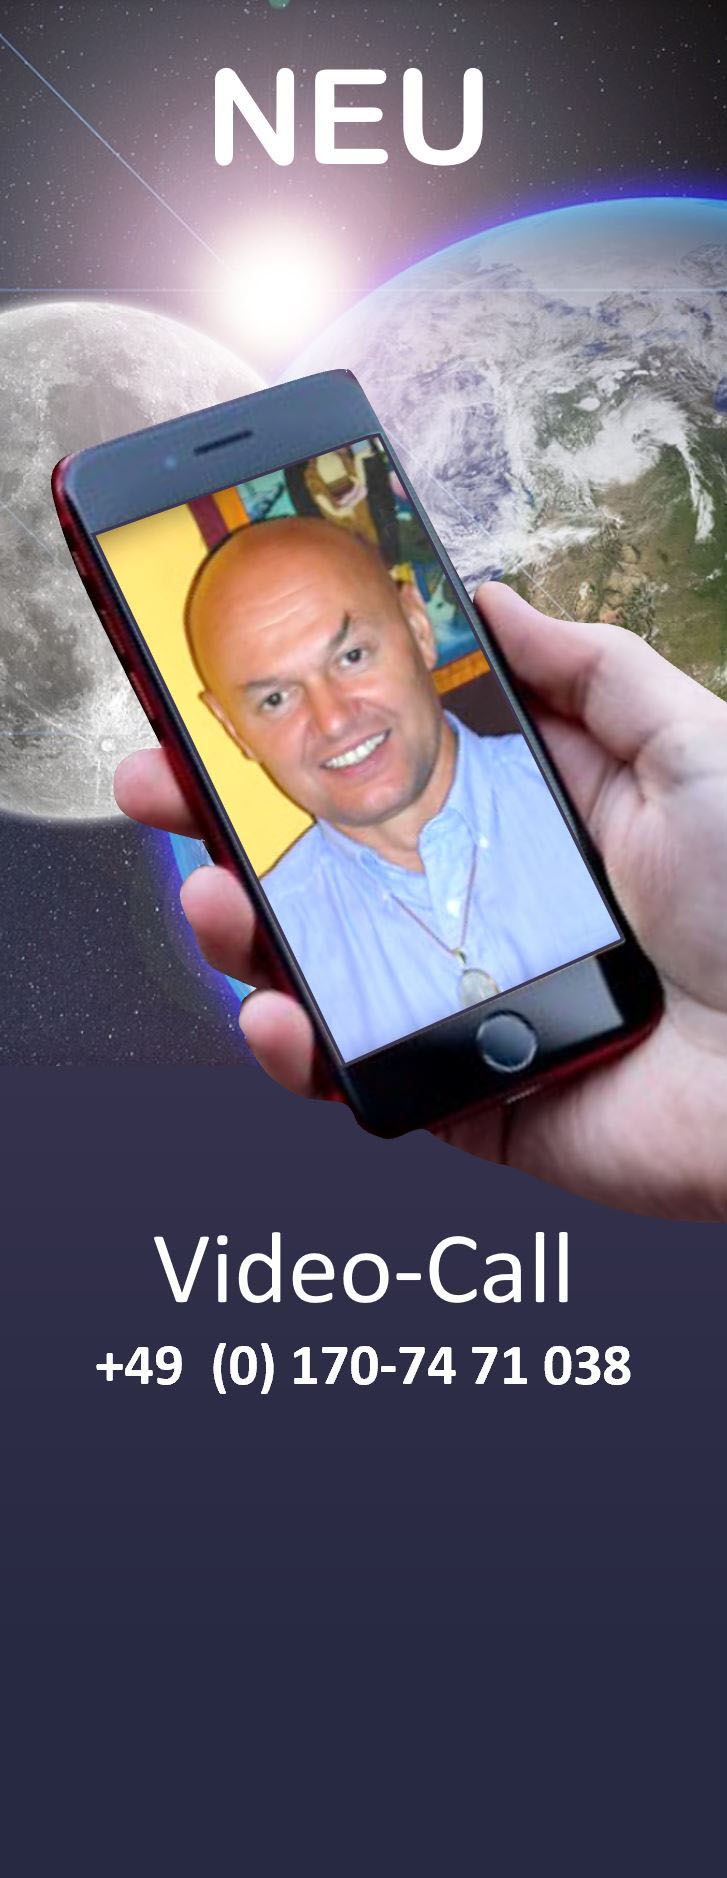 Video-Call